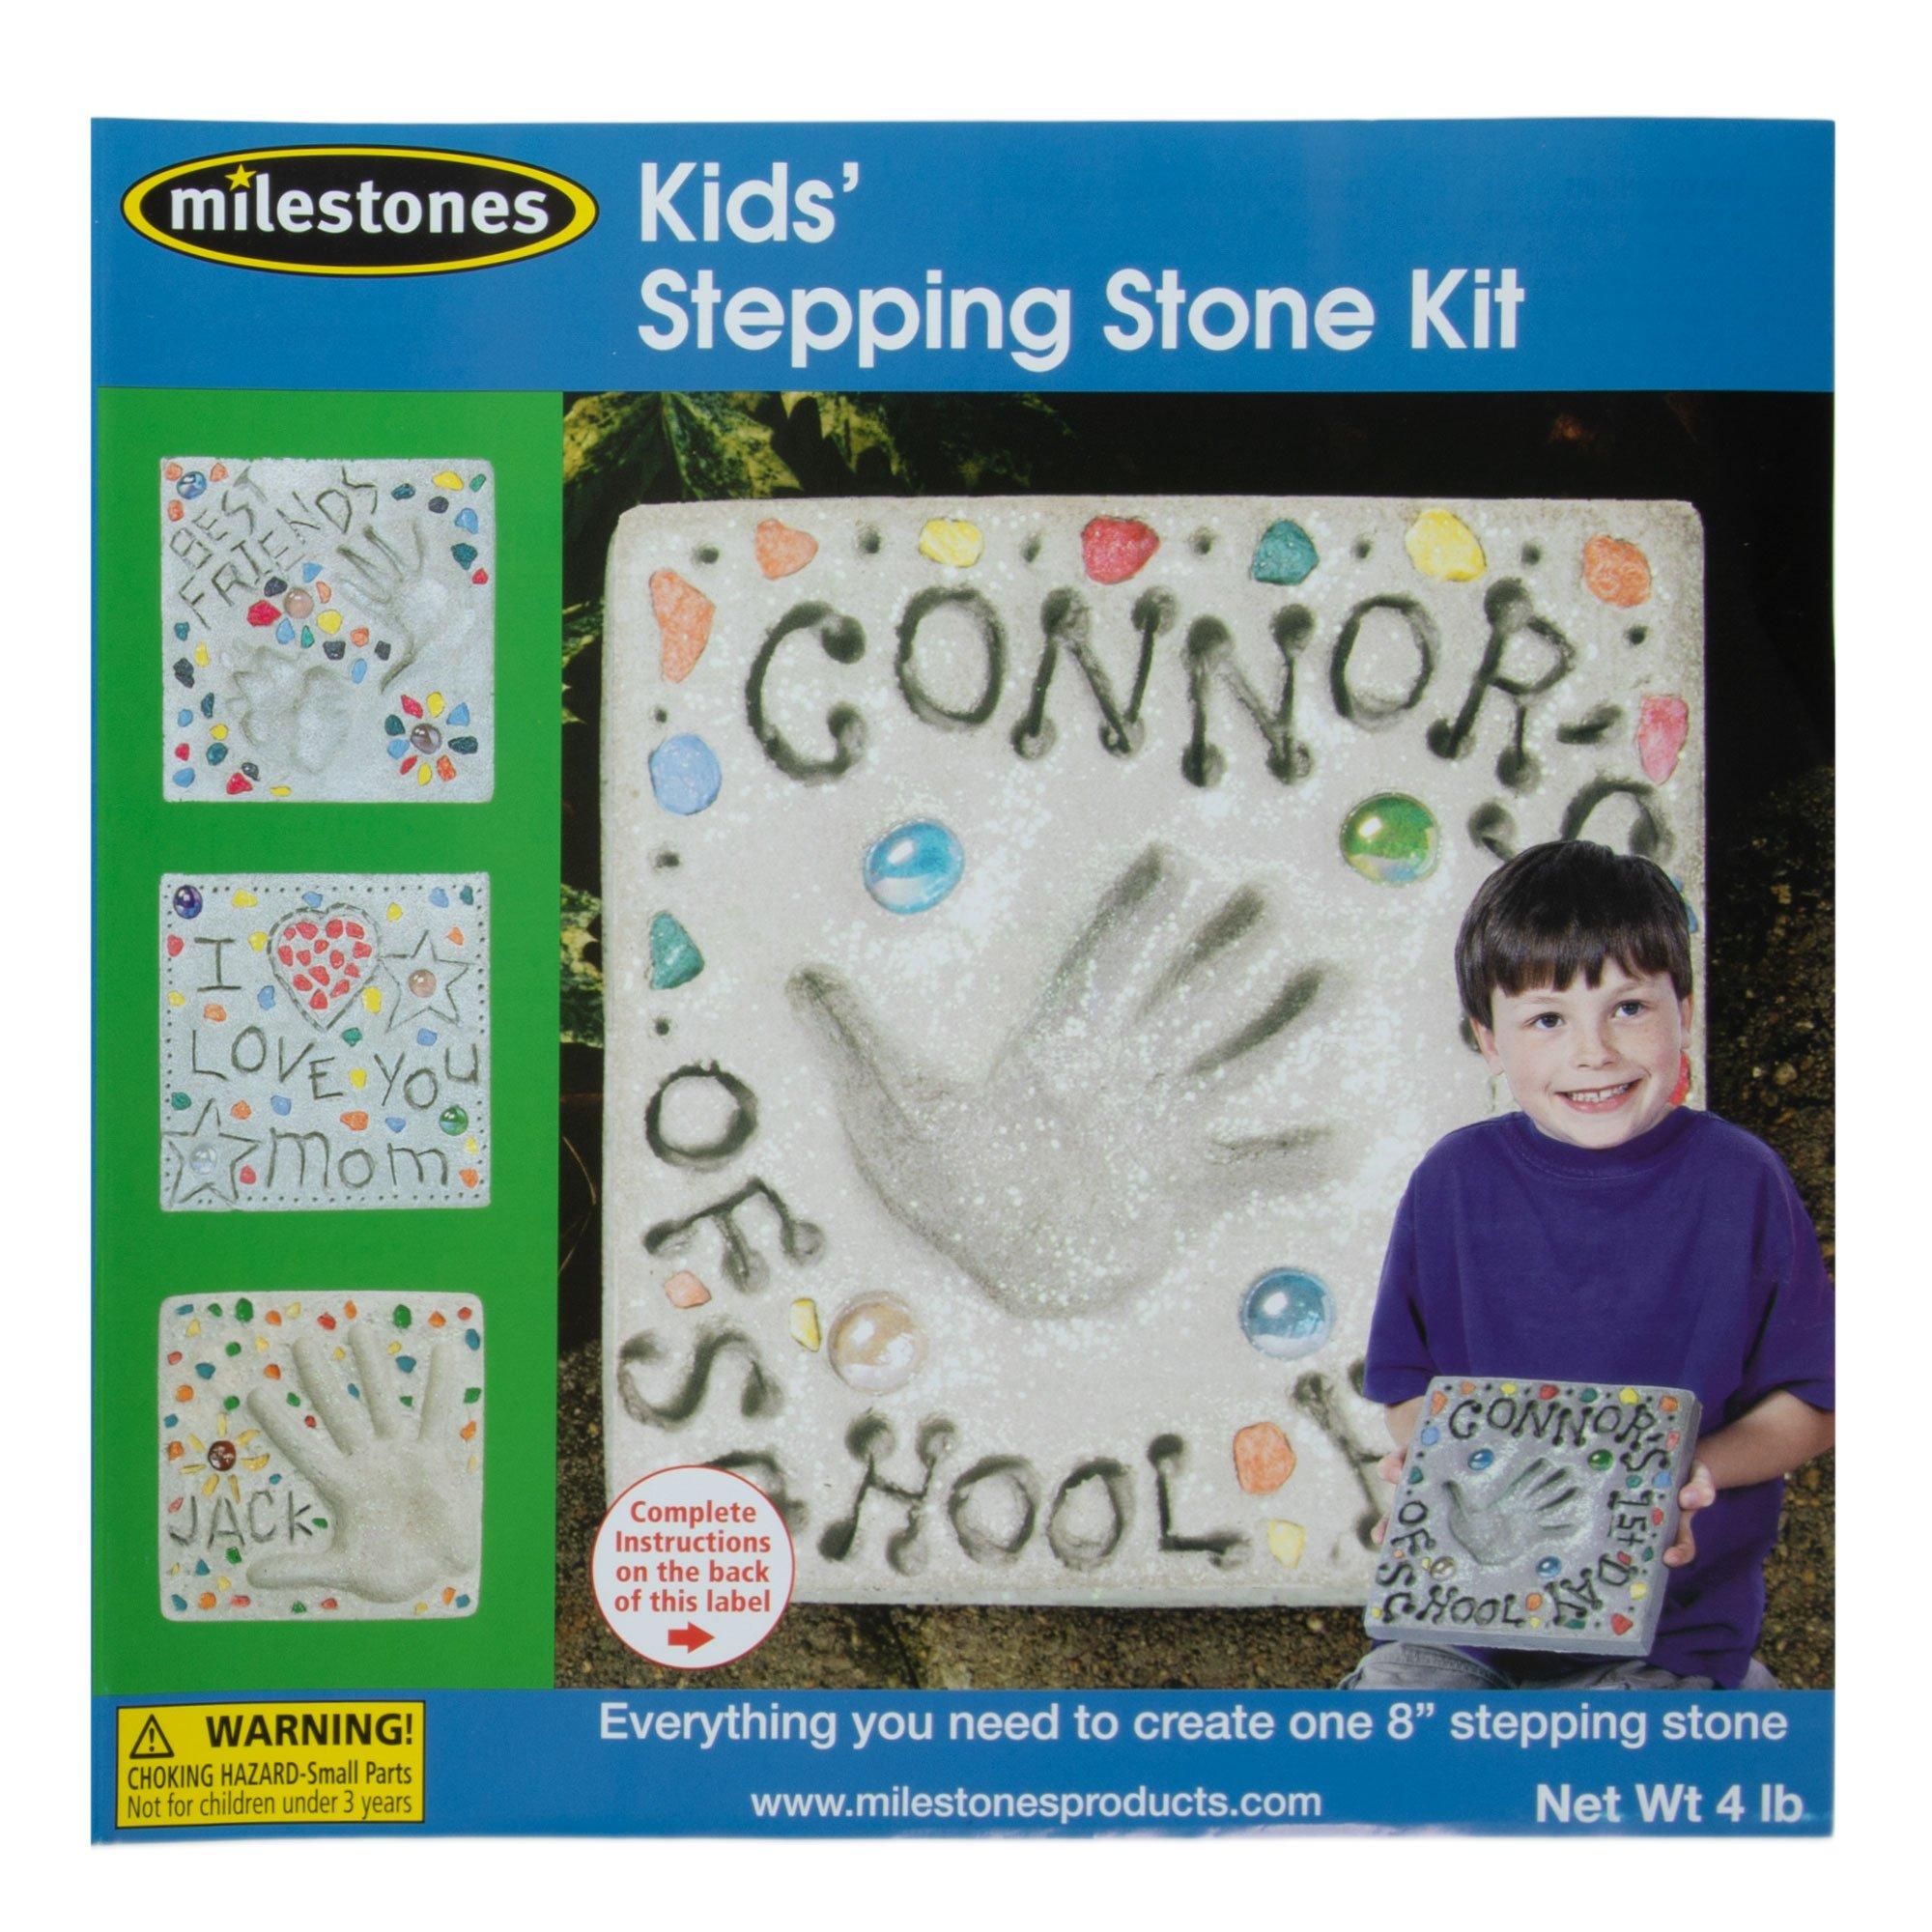 Milestones 12 Daisy Mosaic Stepping Stone Kit